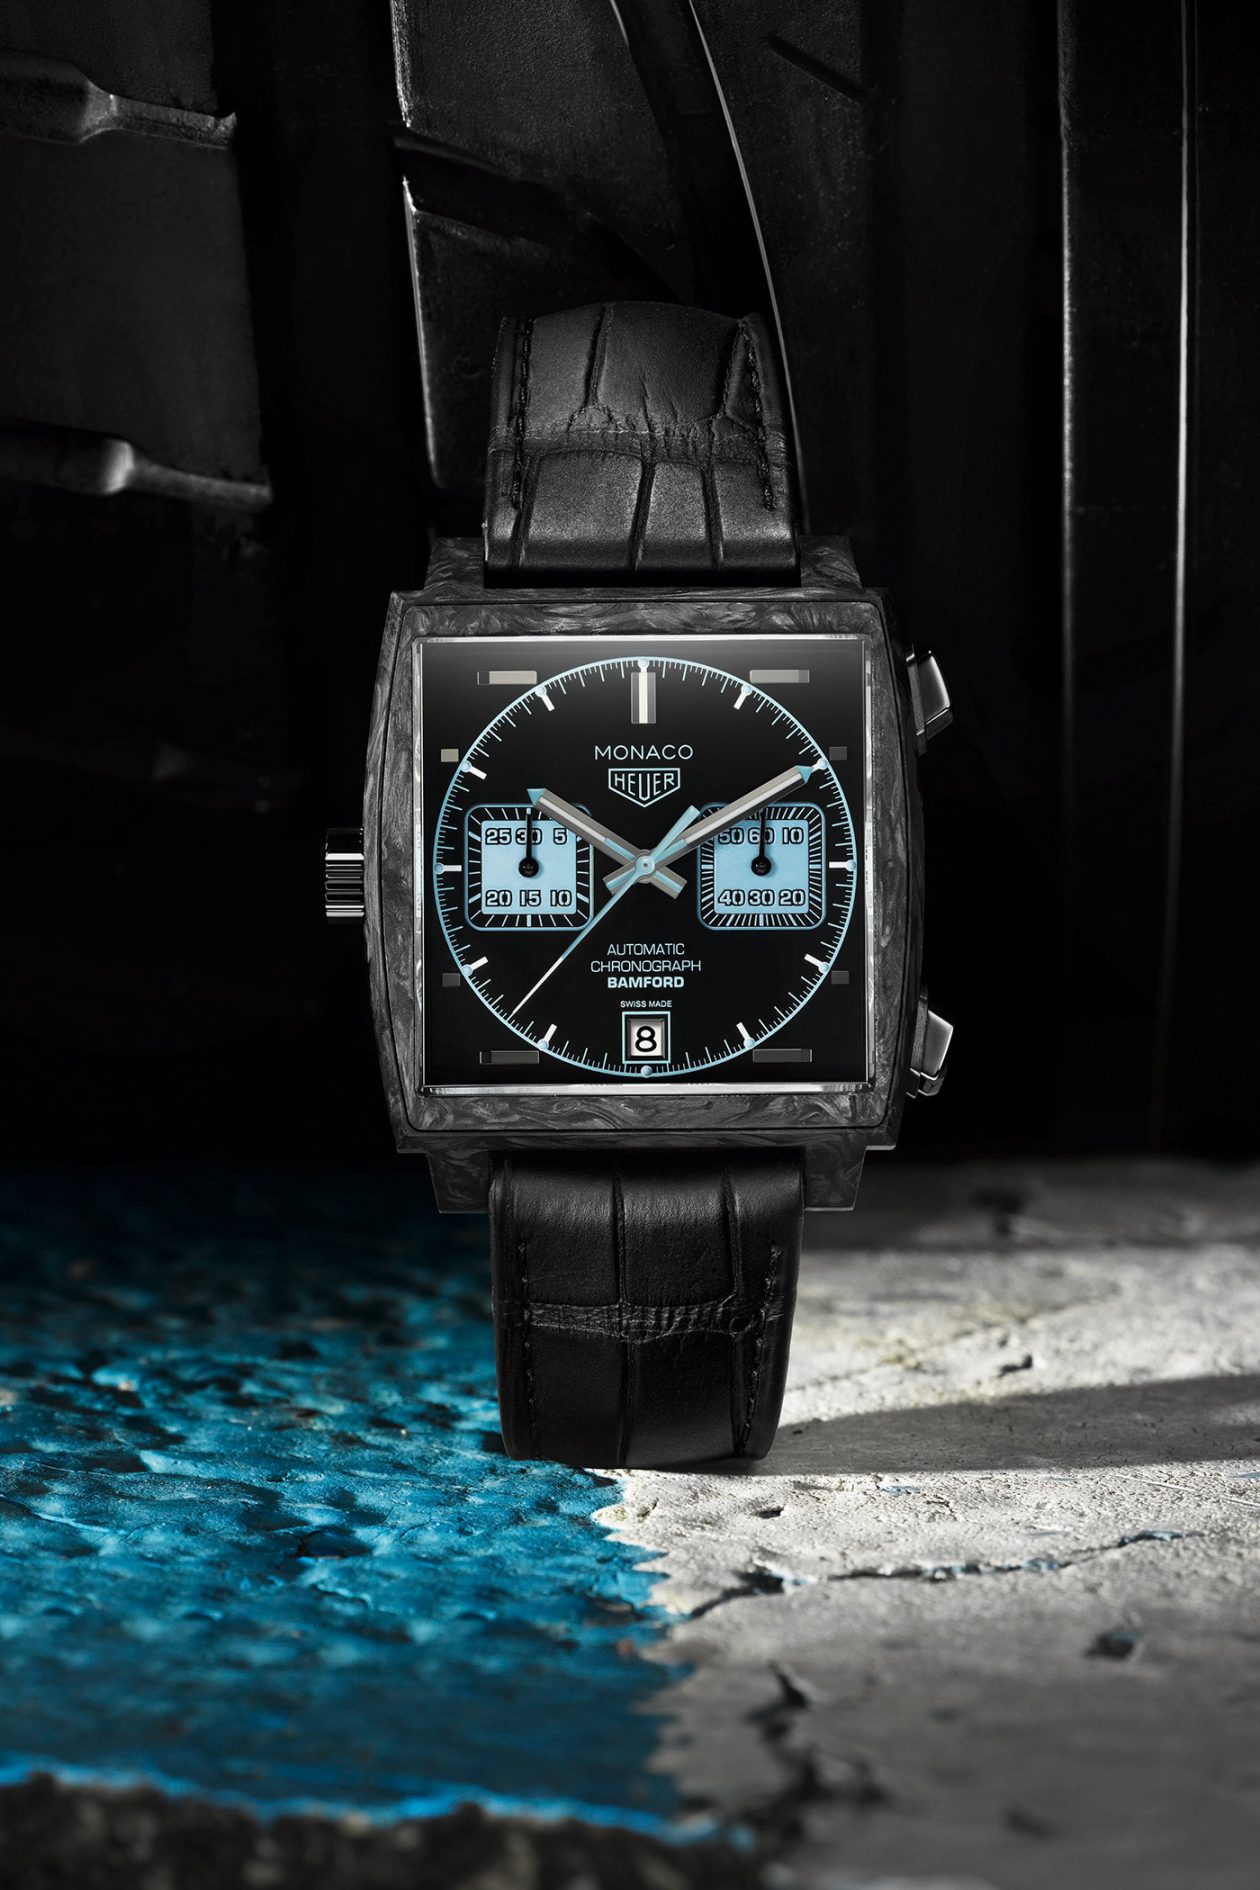 The carbon fiber copy watches have black leather straps.